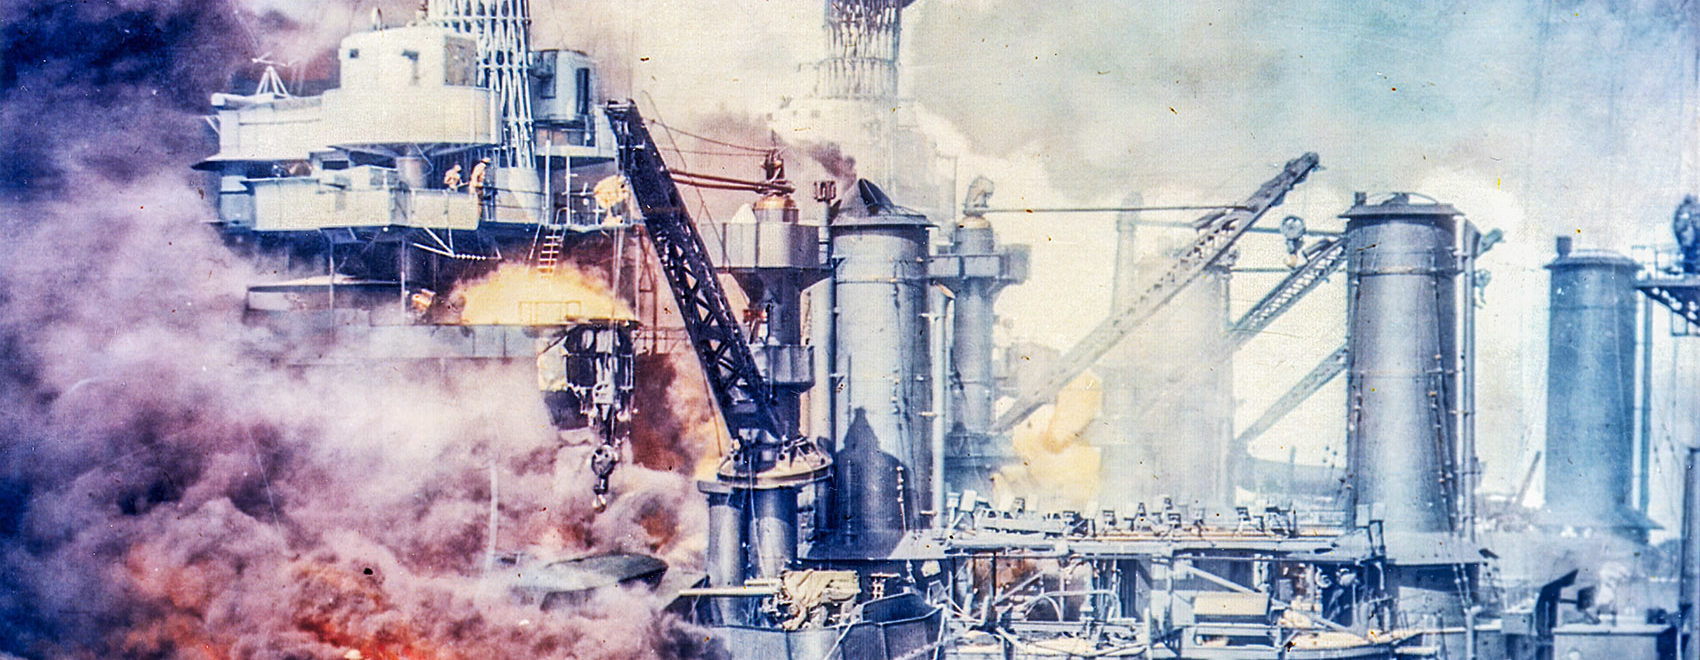 Pearl Harbor flames and explosion on battleship arizona